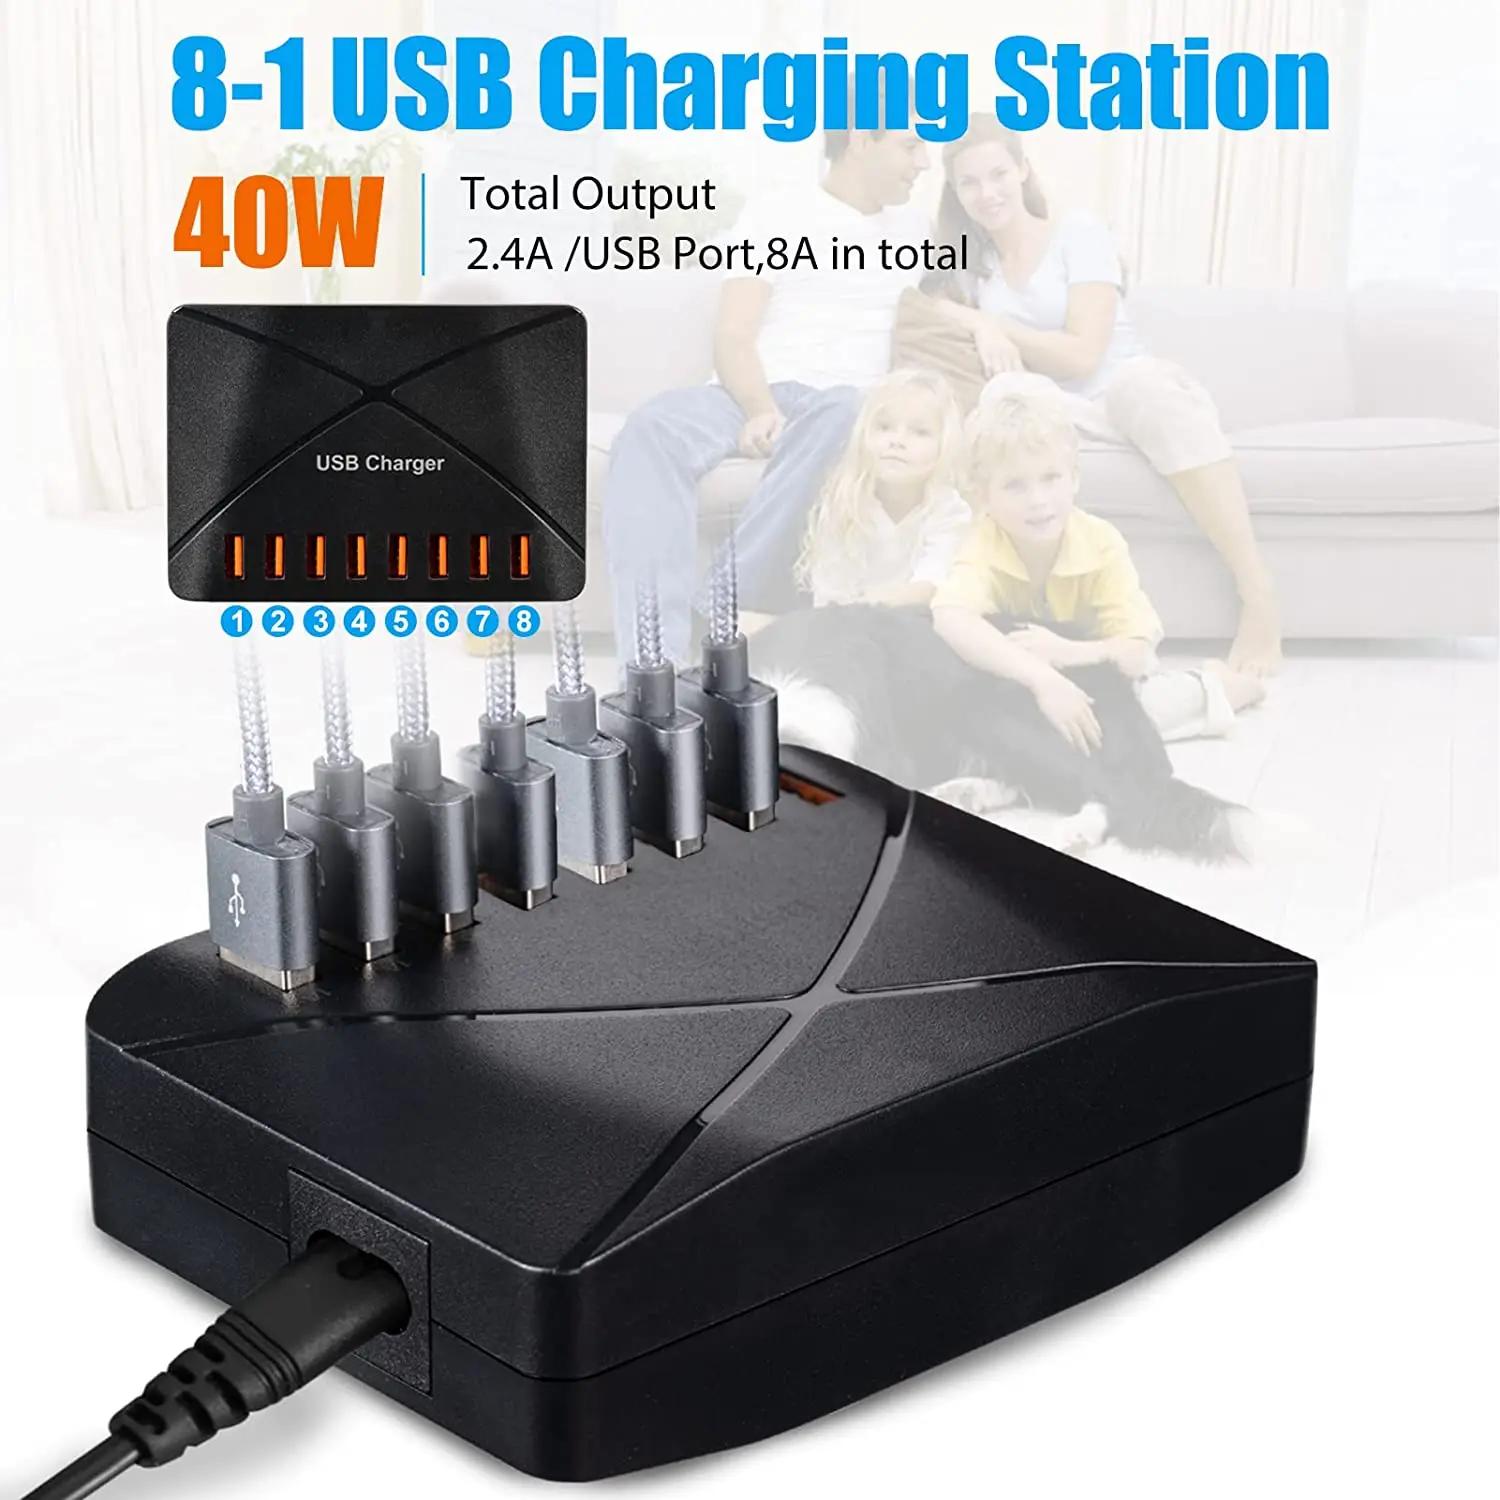 

iLEPO 40W 8 Ports Multi USB Charger 5V/2.4A USB Charging Station Travel Charger For iPhone/iPad/iPod pro/Air US EU UK AU